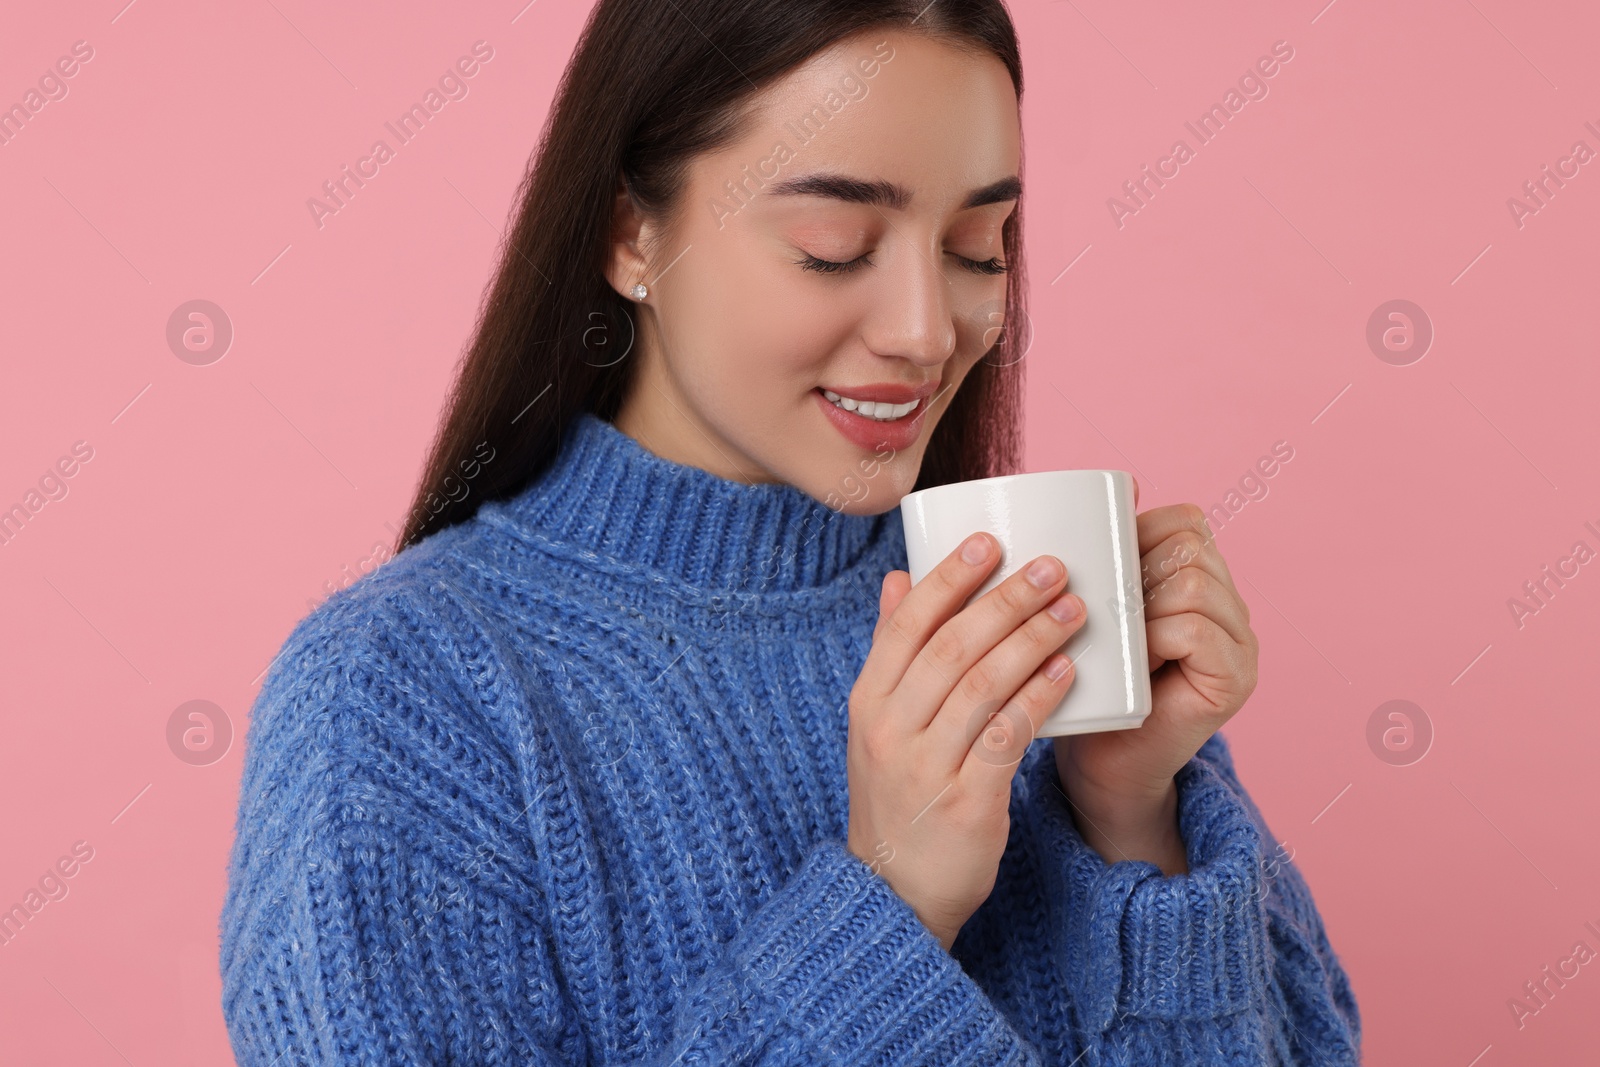 Photo of Happy young woman holding white ceramic mug on pink background